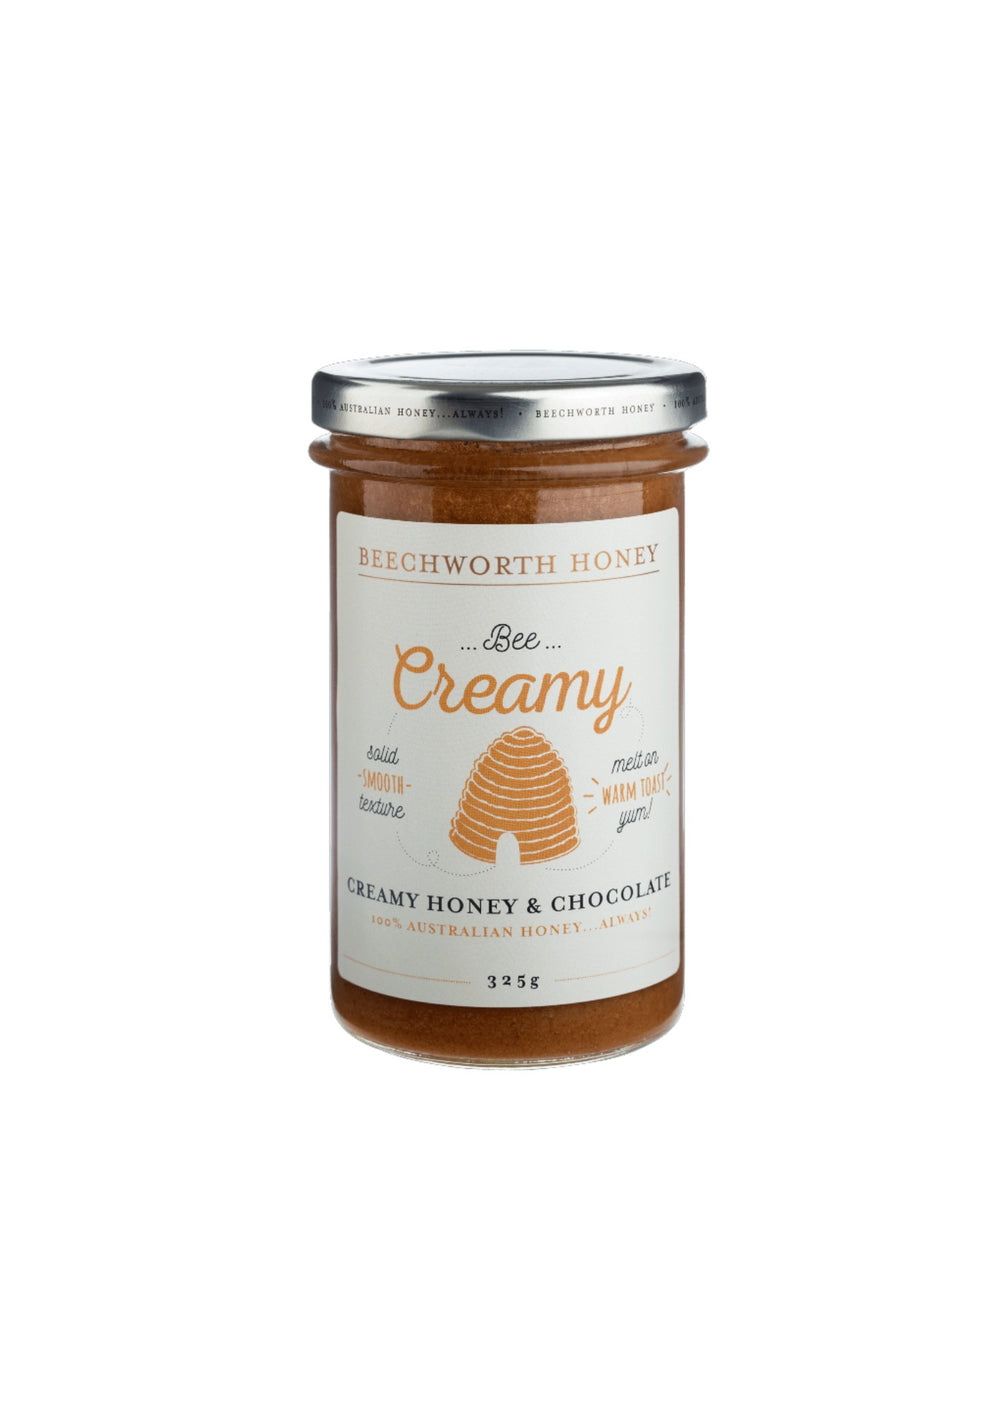 Creamed Honey Chocolate Hazelnut - Limited Edition